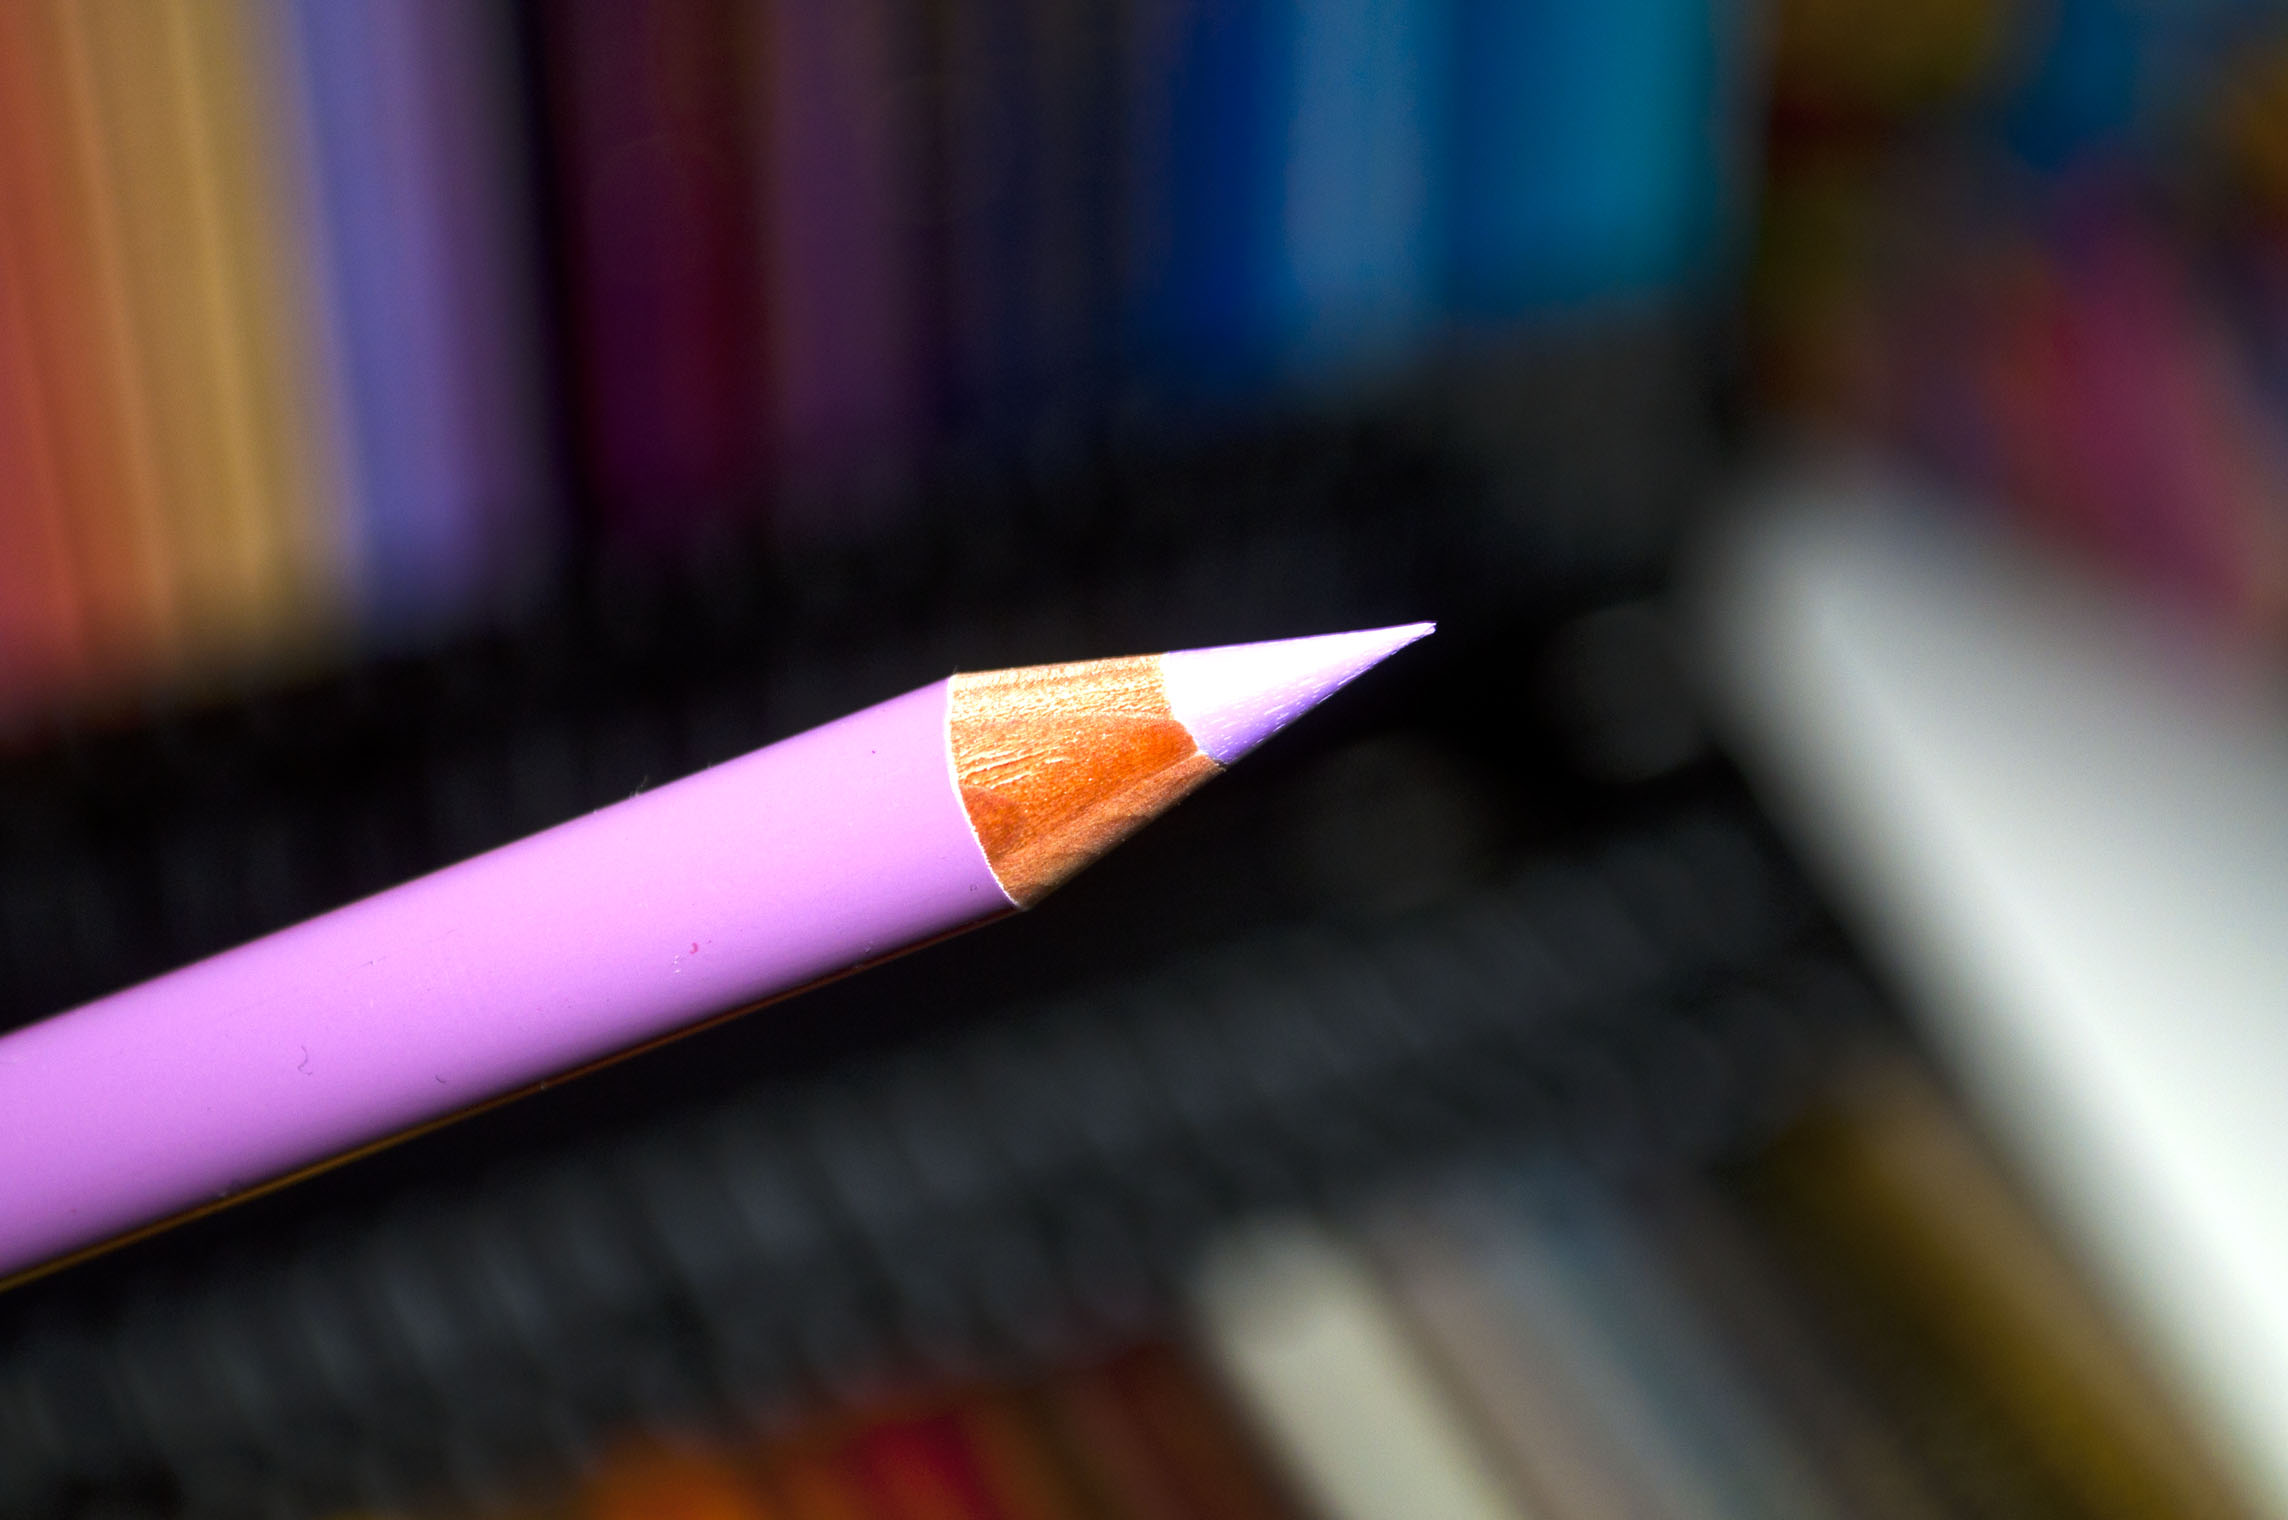  Mitsubishi Pencil Uni Colored Pencils 100 Colors Set : Wood  Colored Pencils : Office Products